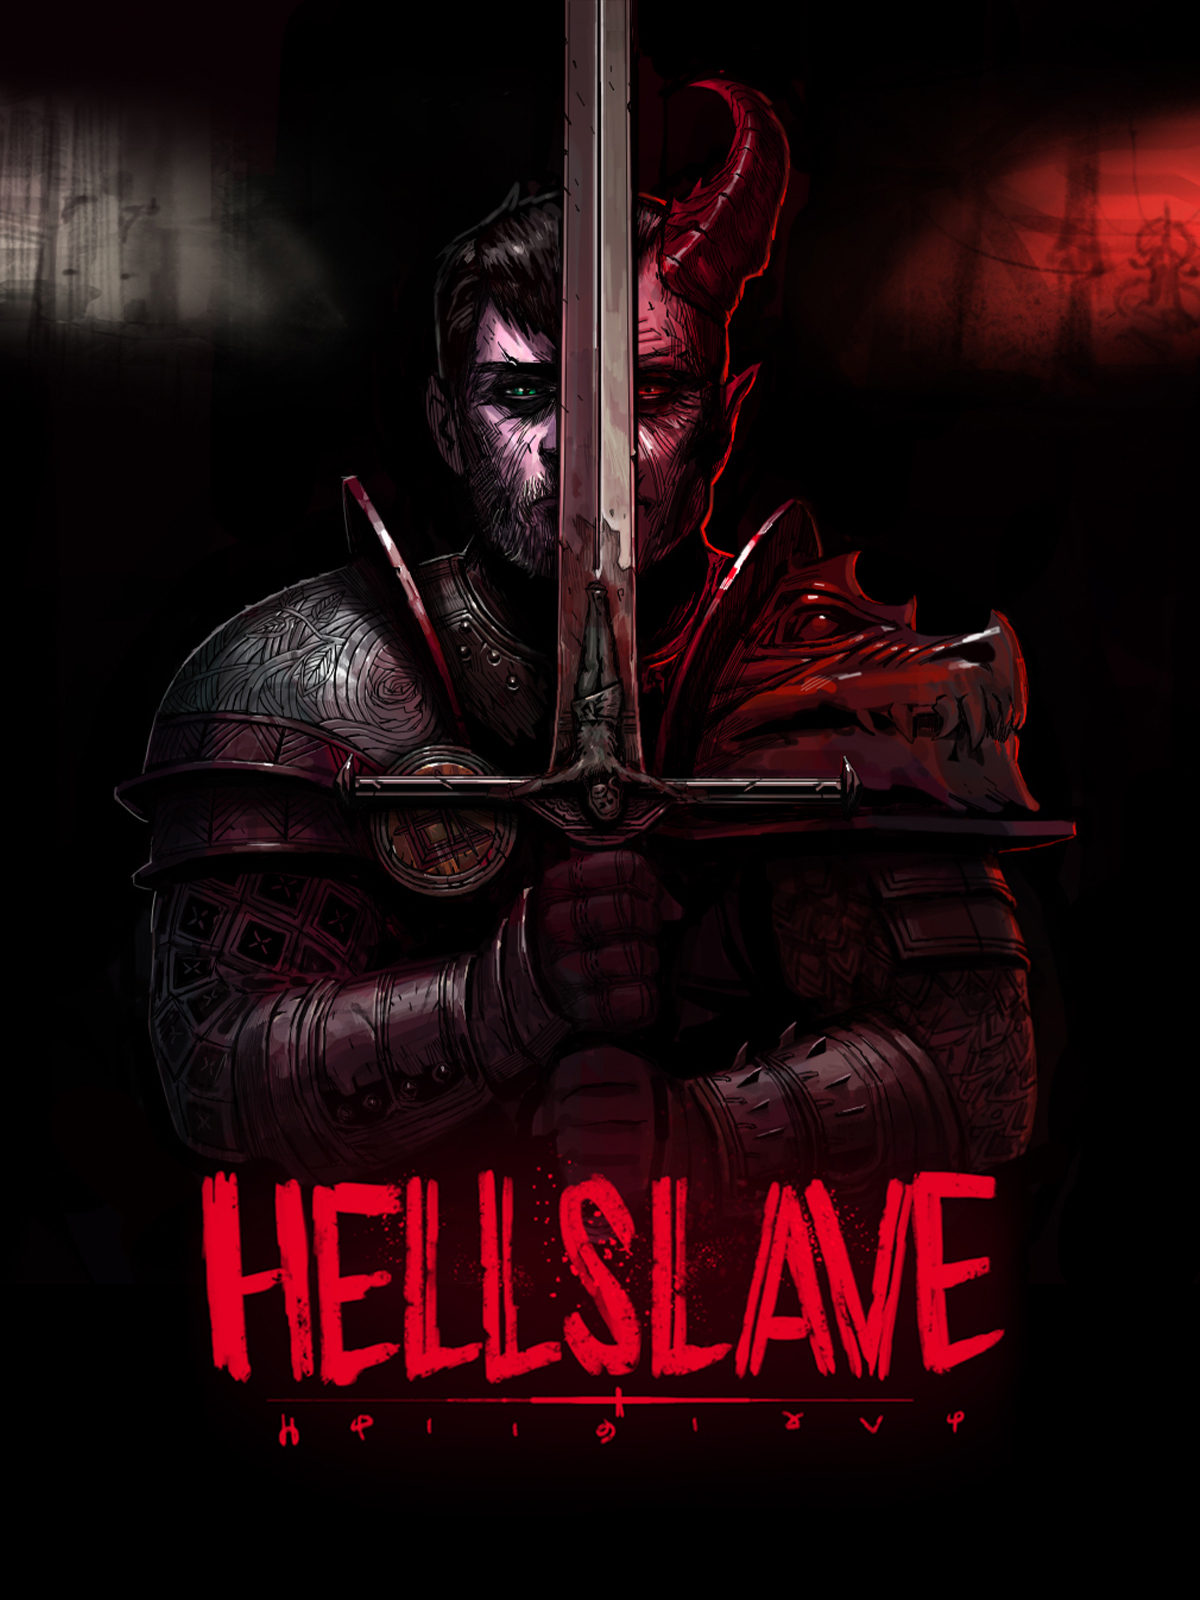 Hellslave [PC, Цифровая версия] (Цифровая версия) цена и фото